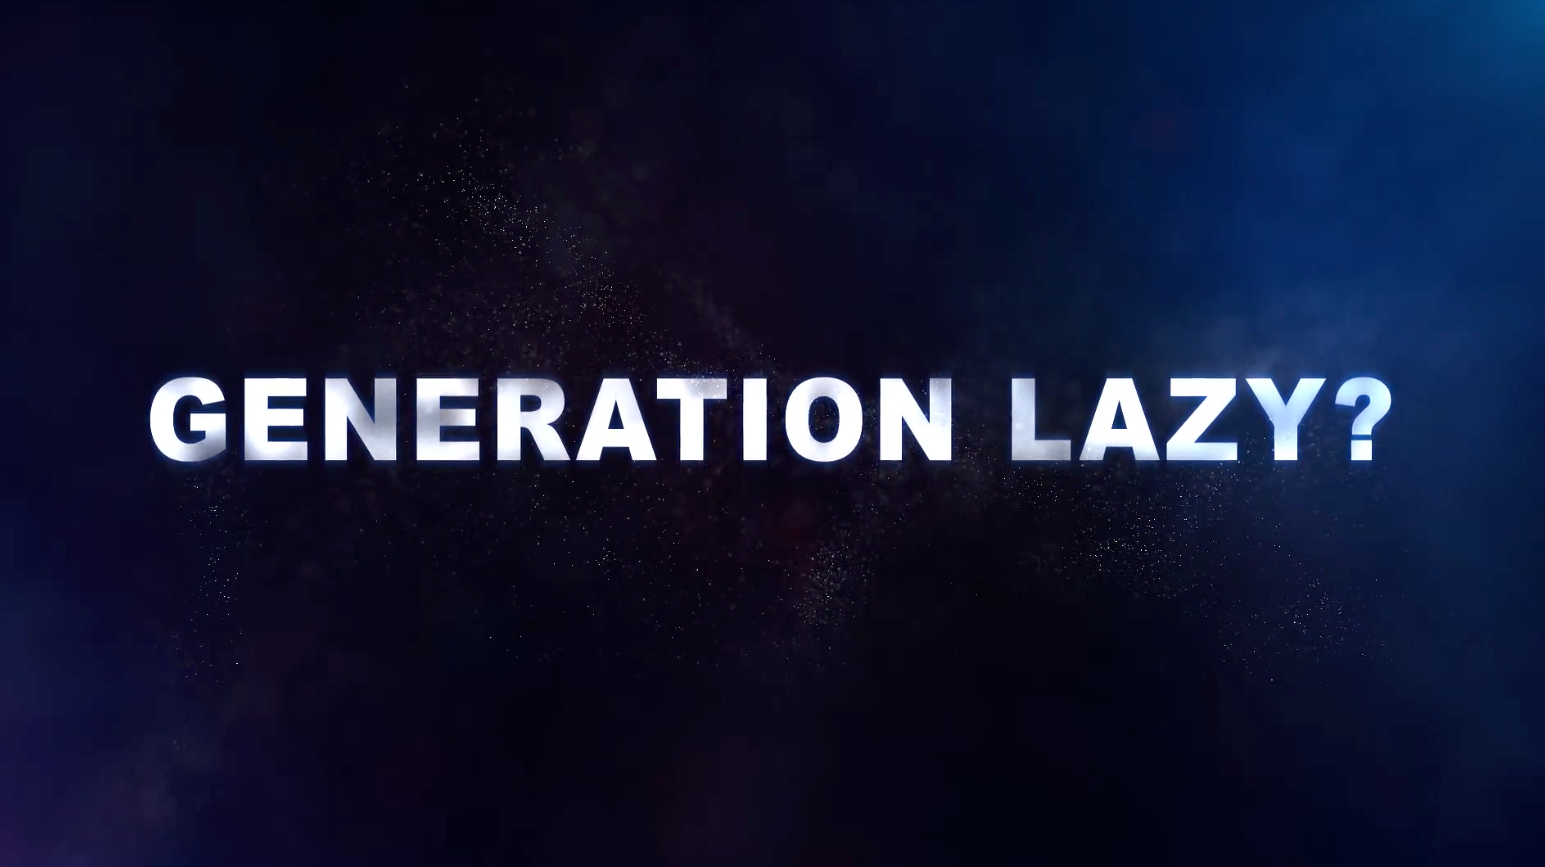 Generation Lazy